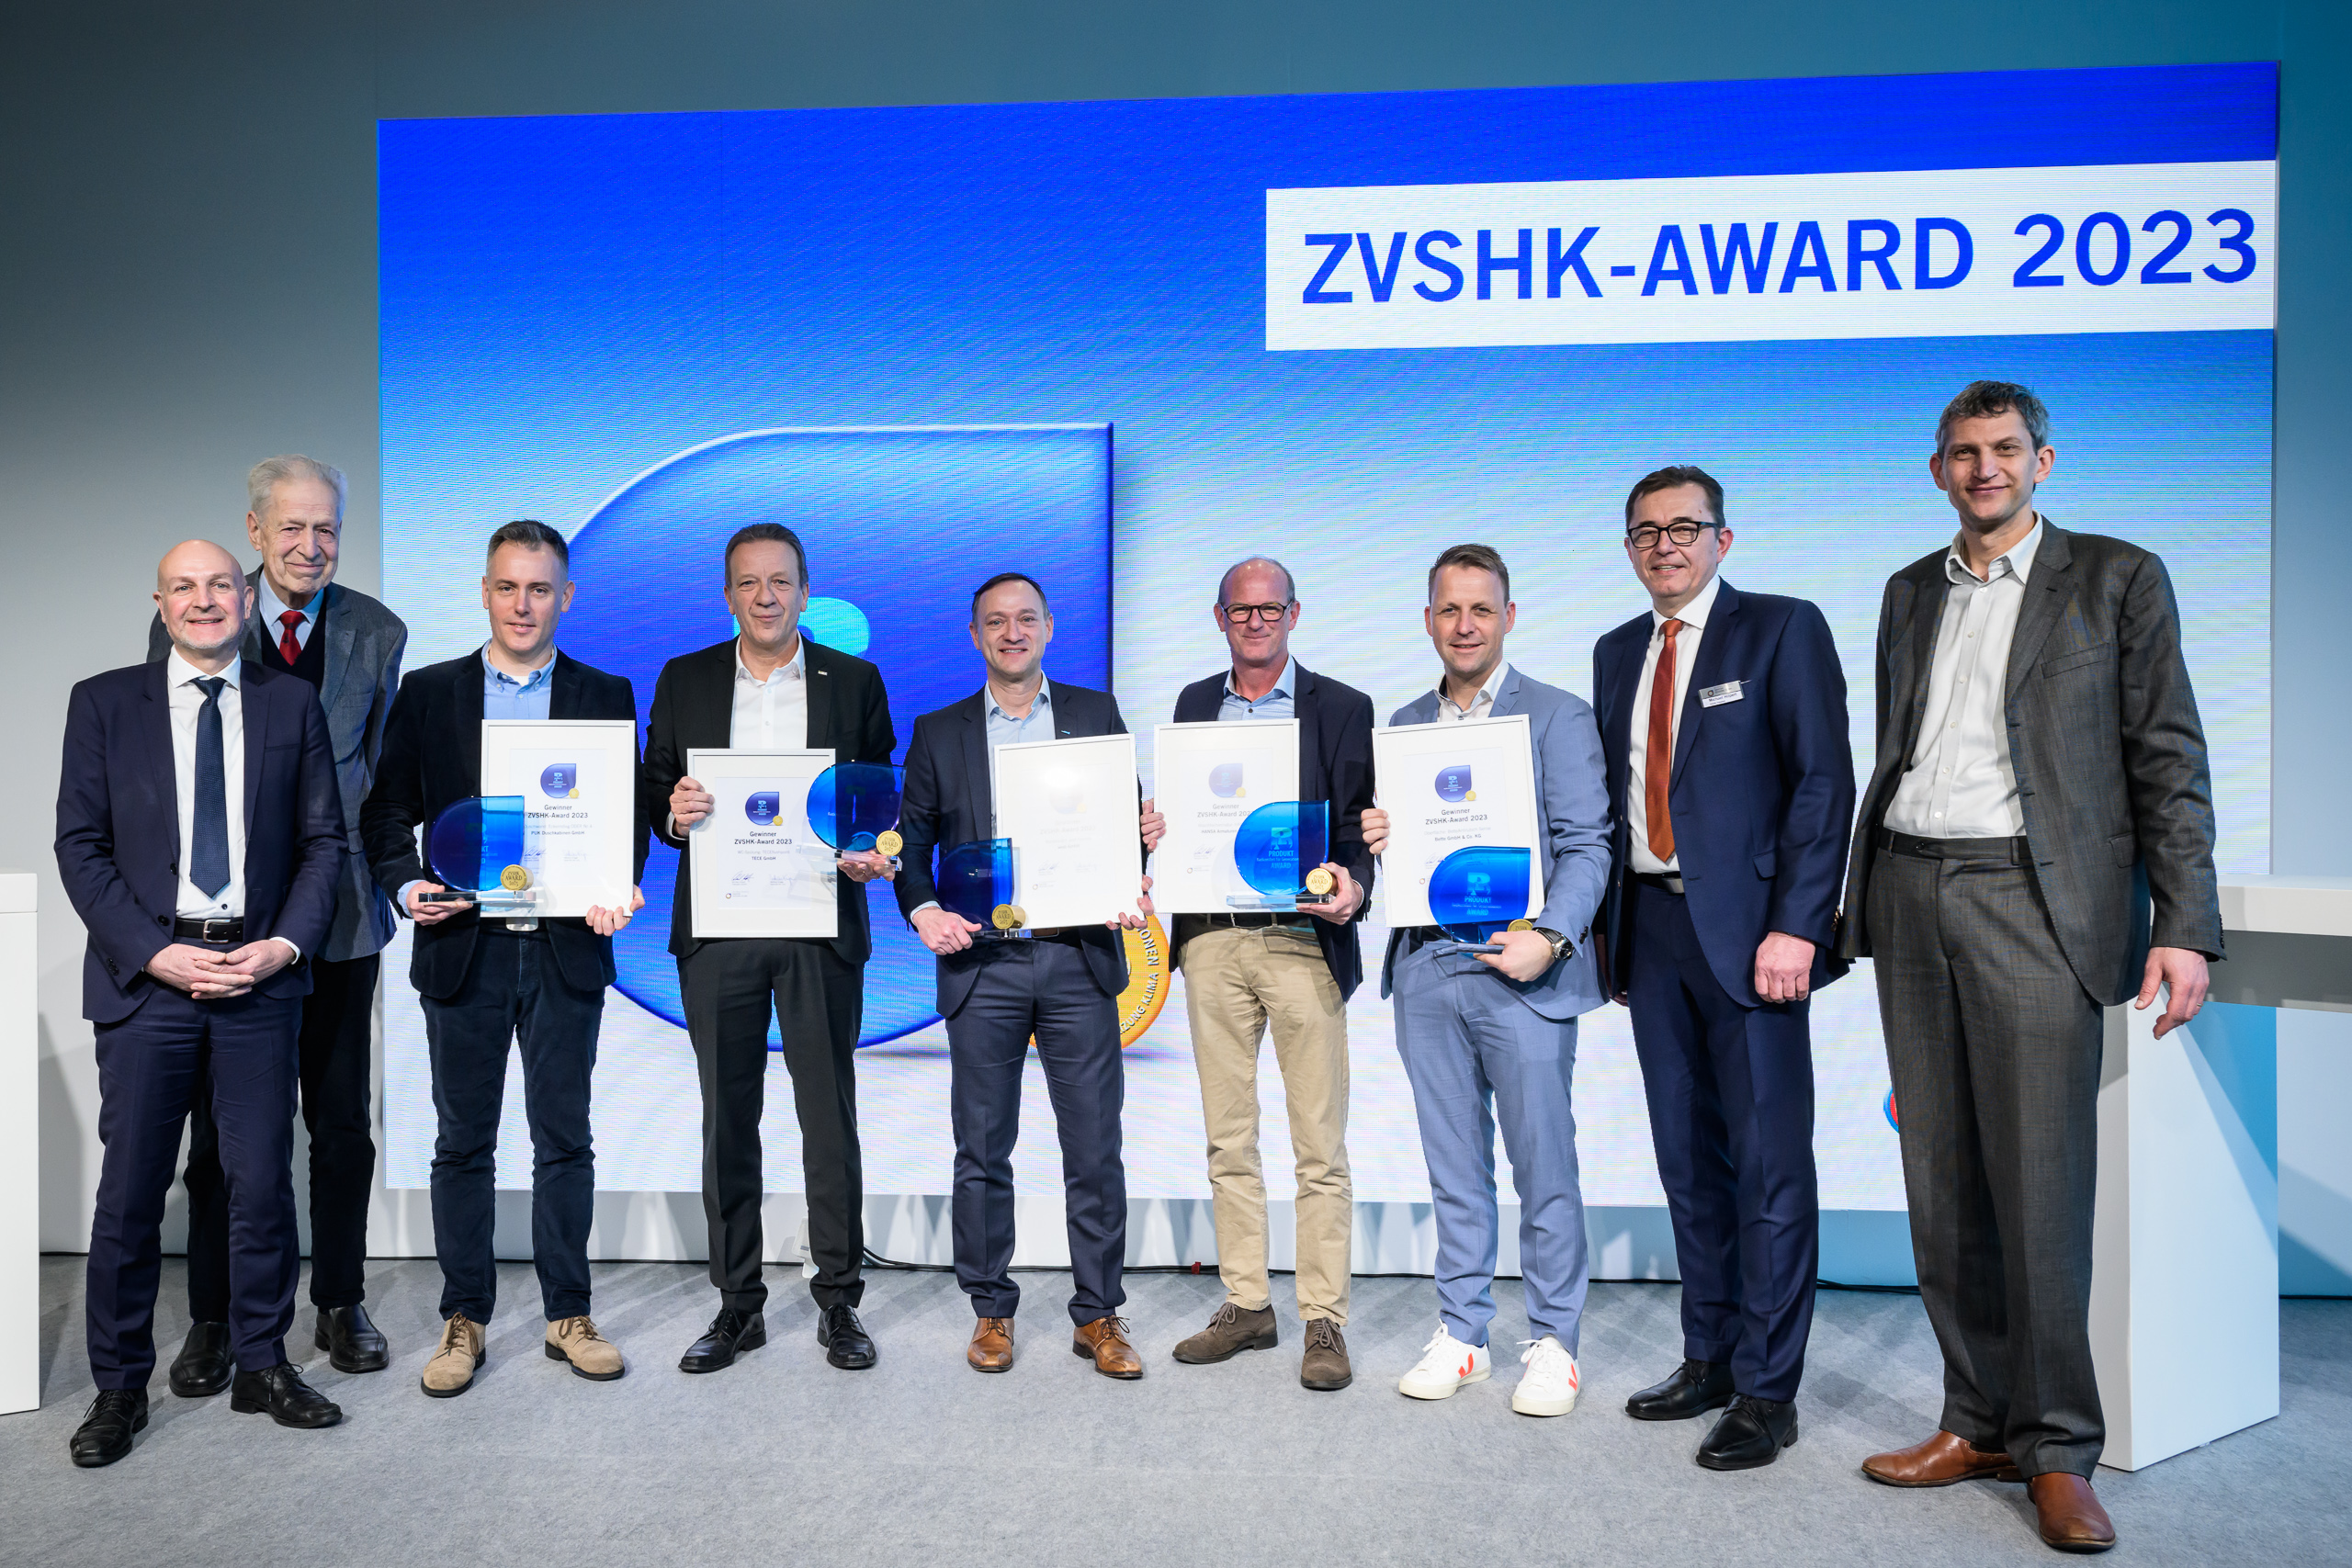 Award ceremony ZVSHK Product Award "Bathroom Comfort for Generations" 03